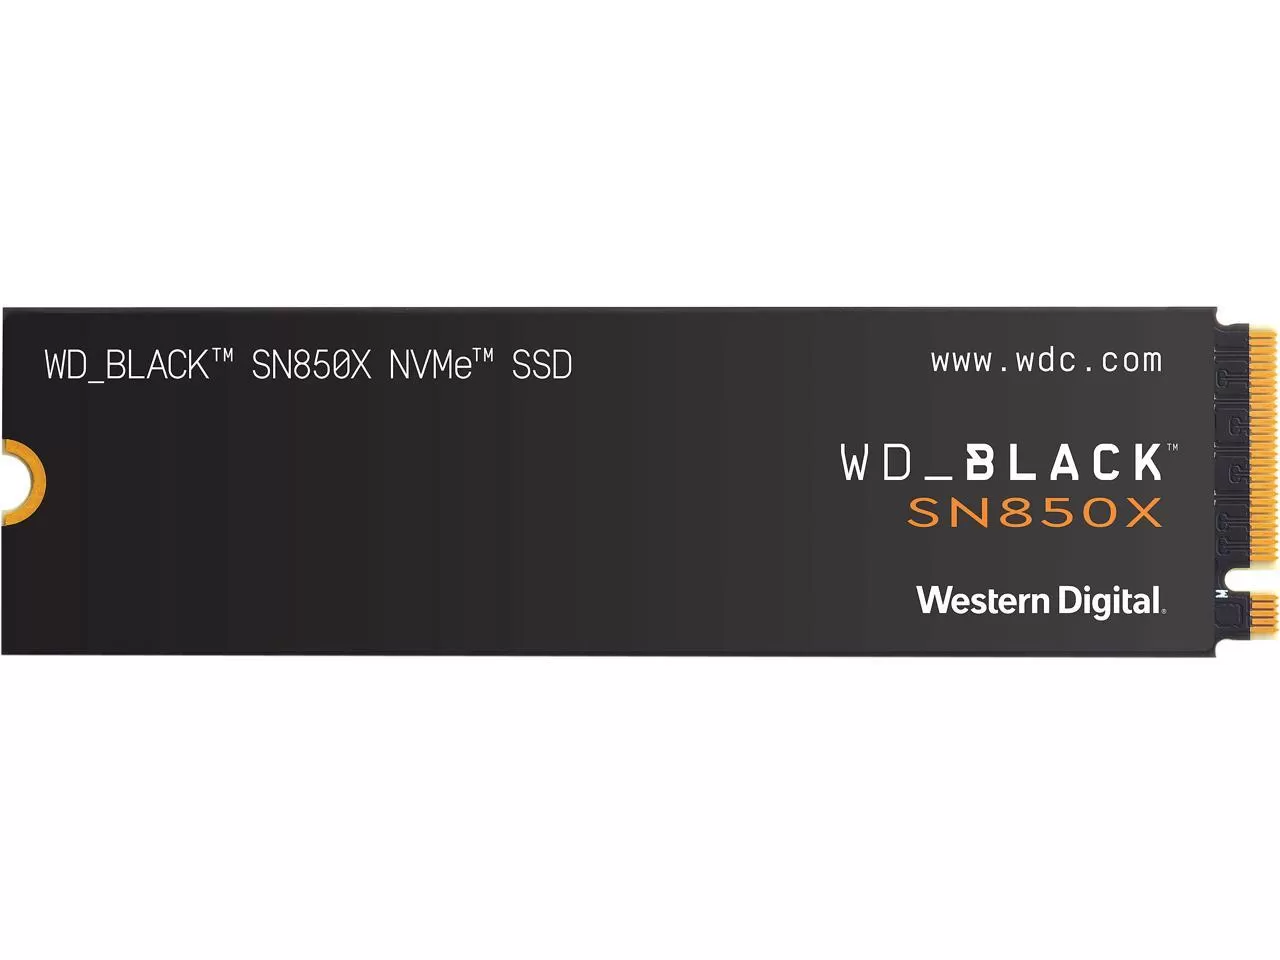 Hard disk ssd western digital wd black sn850x 2tb m.2 2280